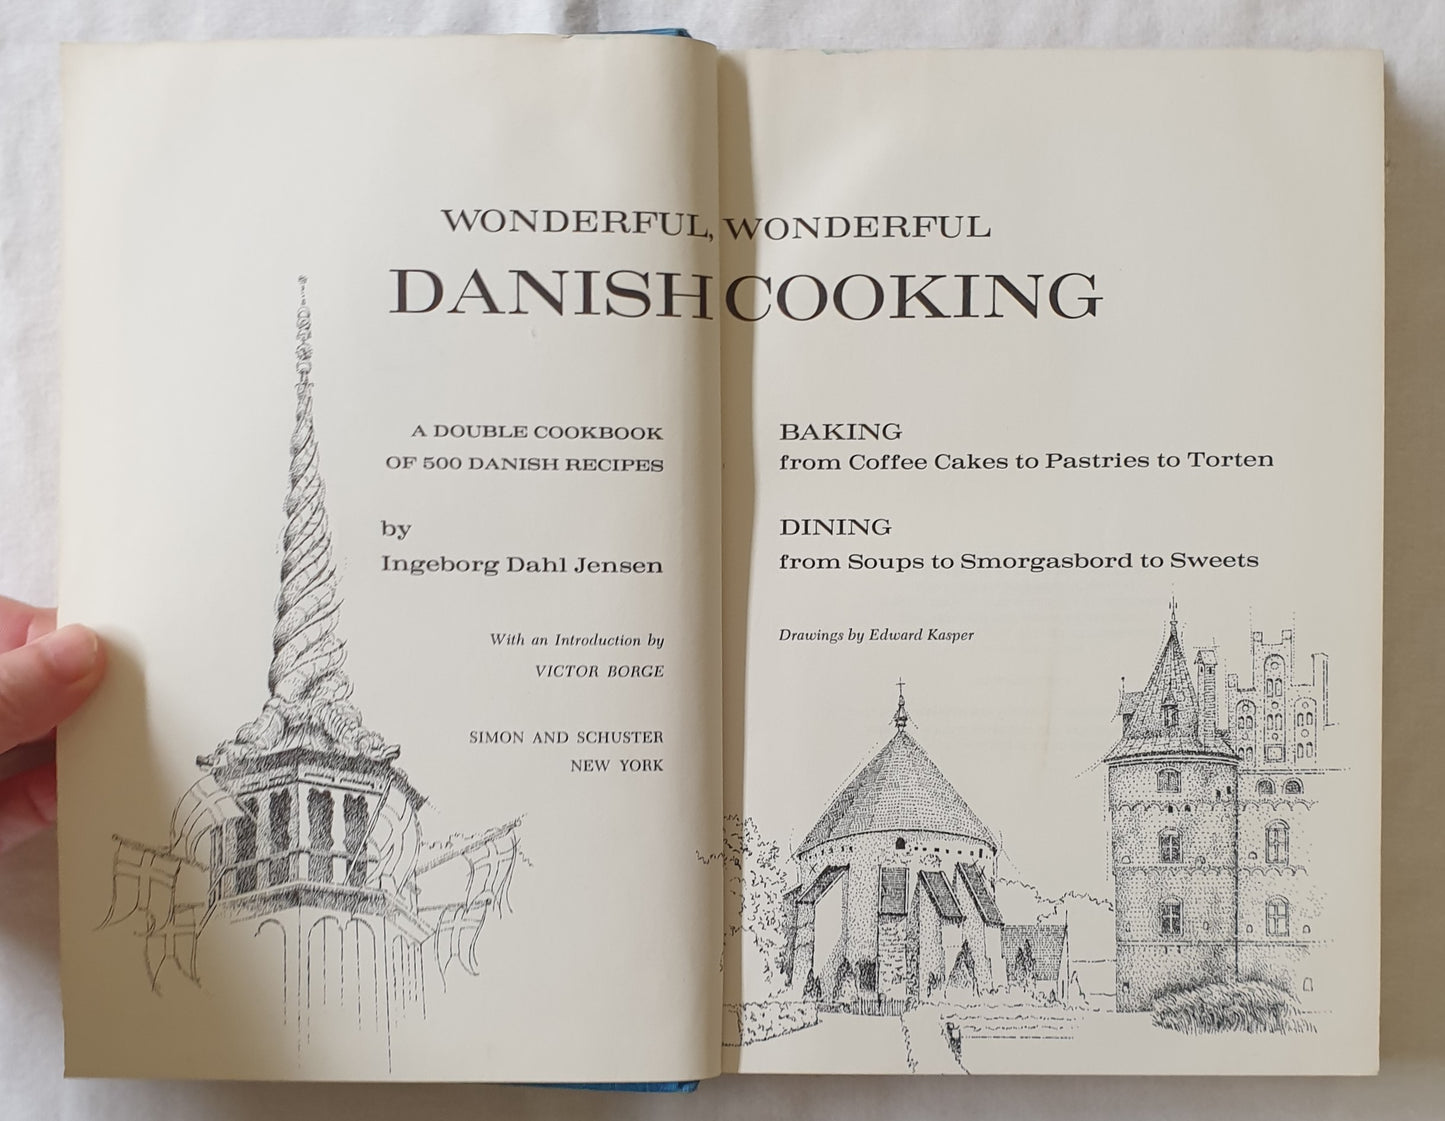 Wonderful, Wonderful Danish Cooking by Ingeborg Dahl Jensen